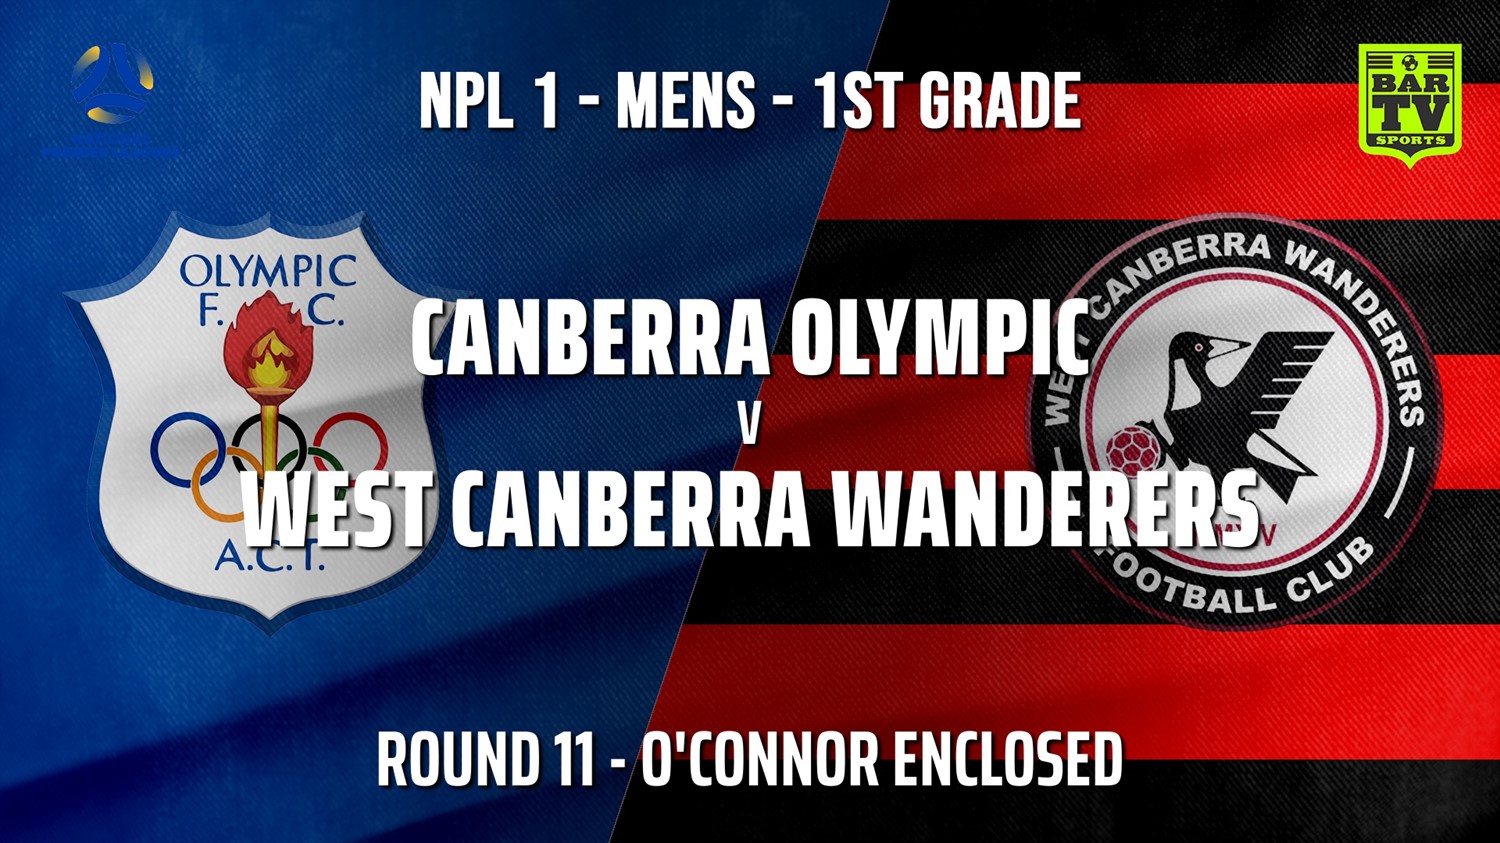 210626-Capital NPL Round 11 - Canberra Olympic FC v West Canberra Wanderers Minigame Slate Image